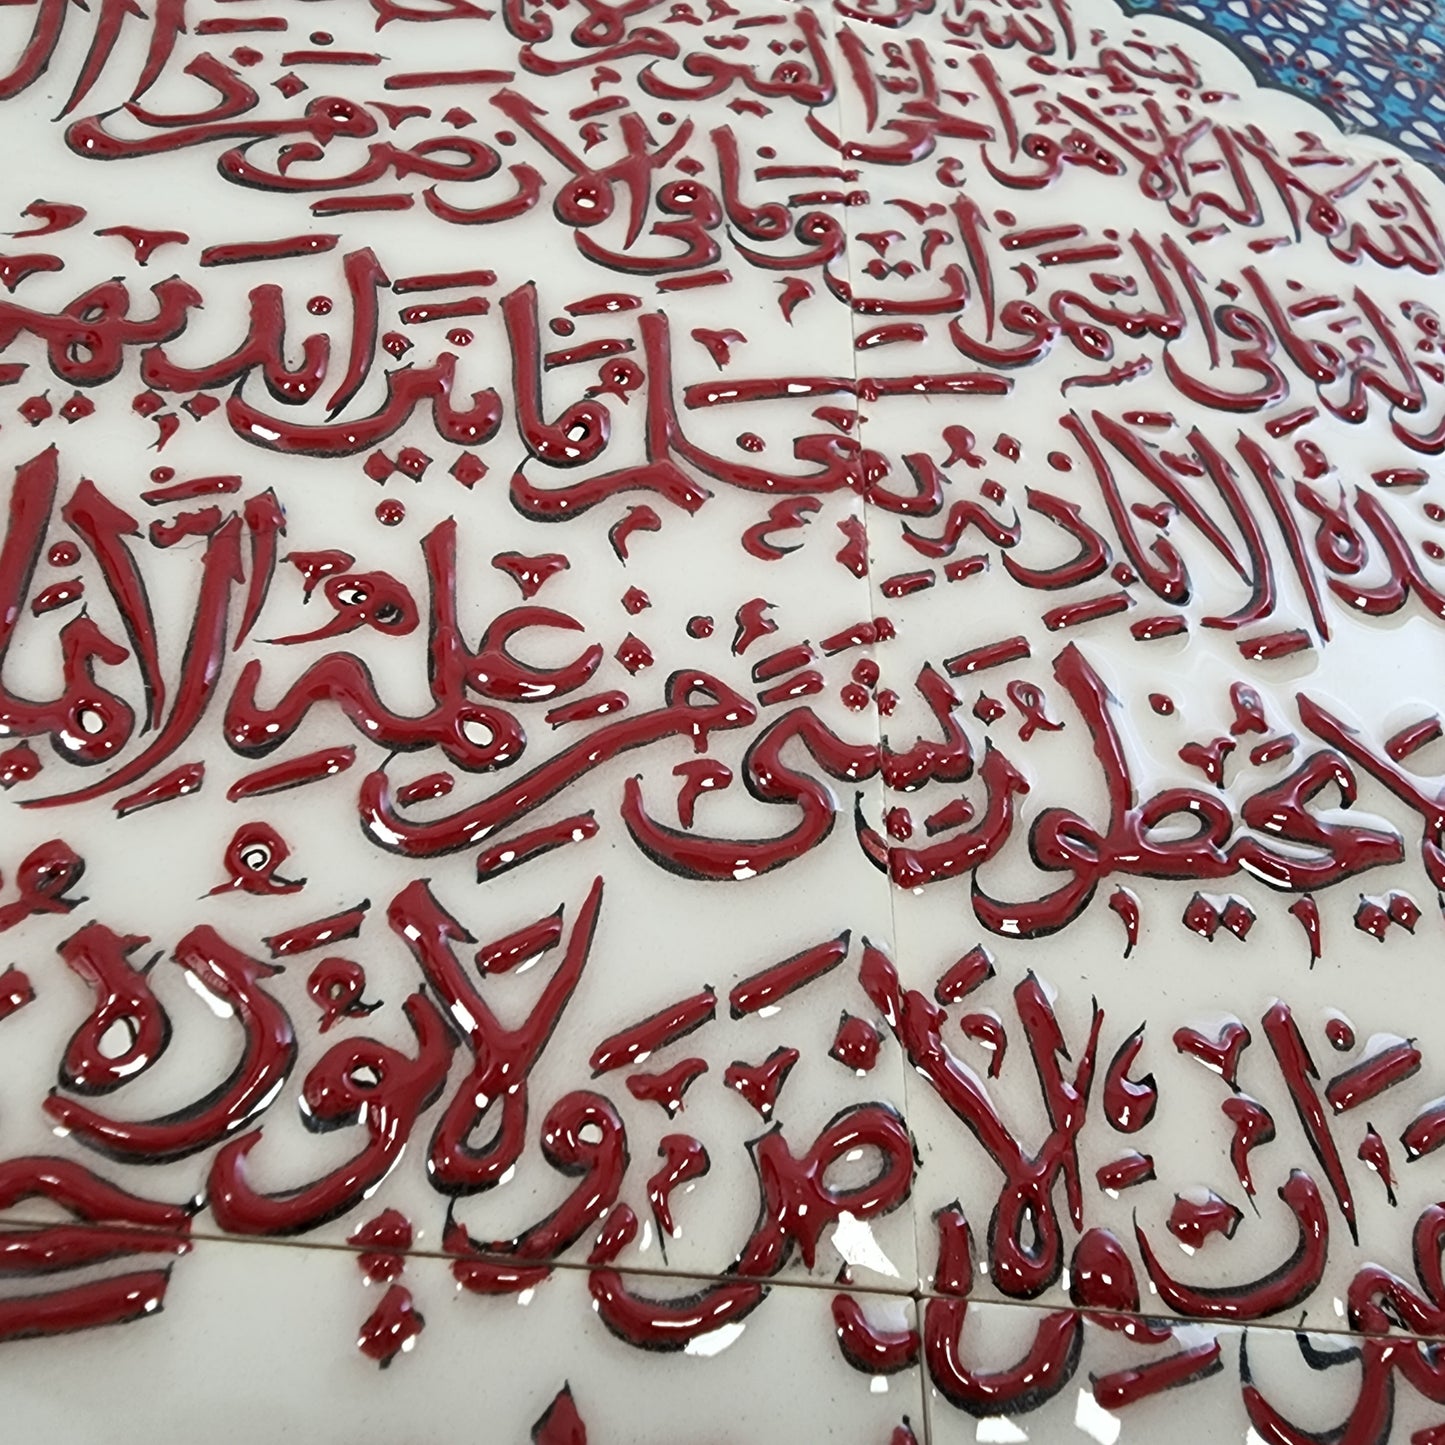 Ayatul Kursi - Islamic Art Calligraphy Ceramic Tile